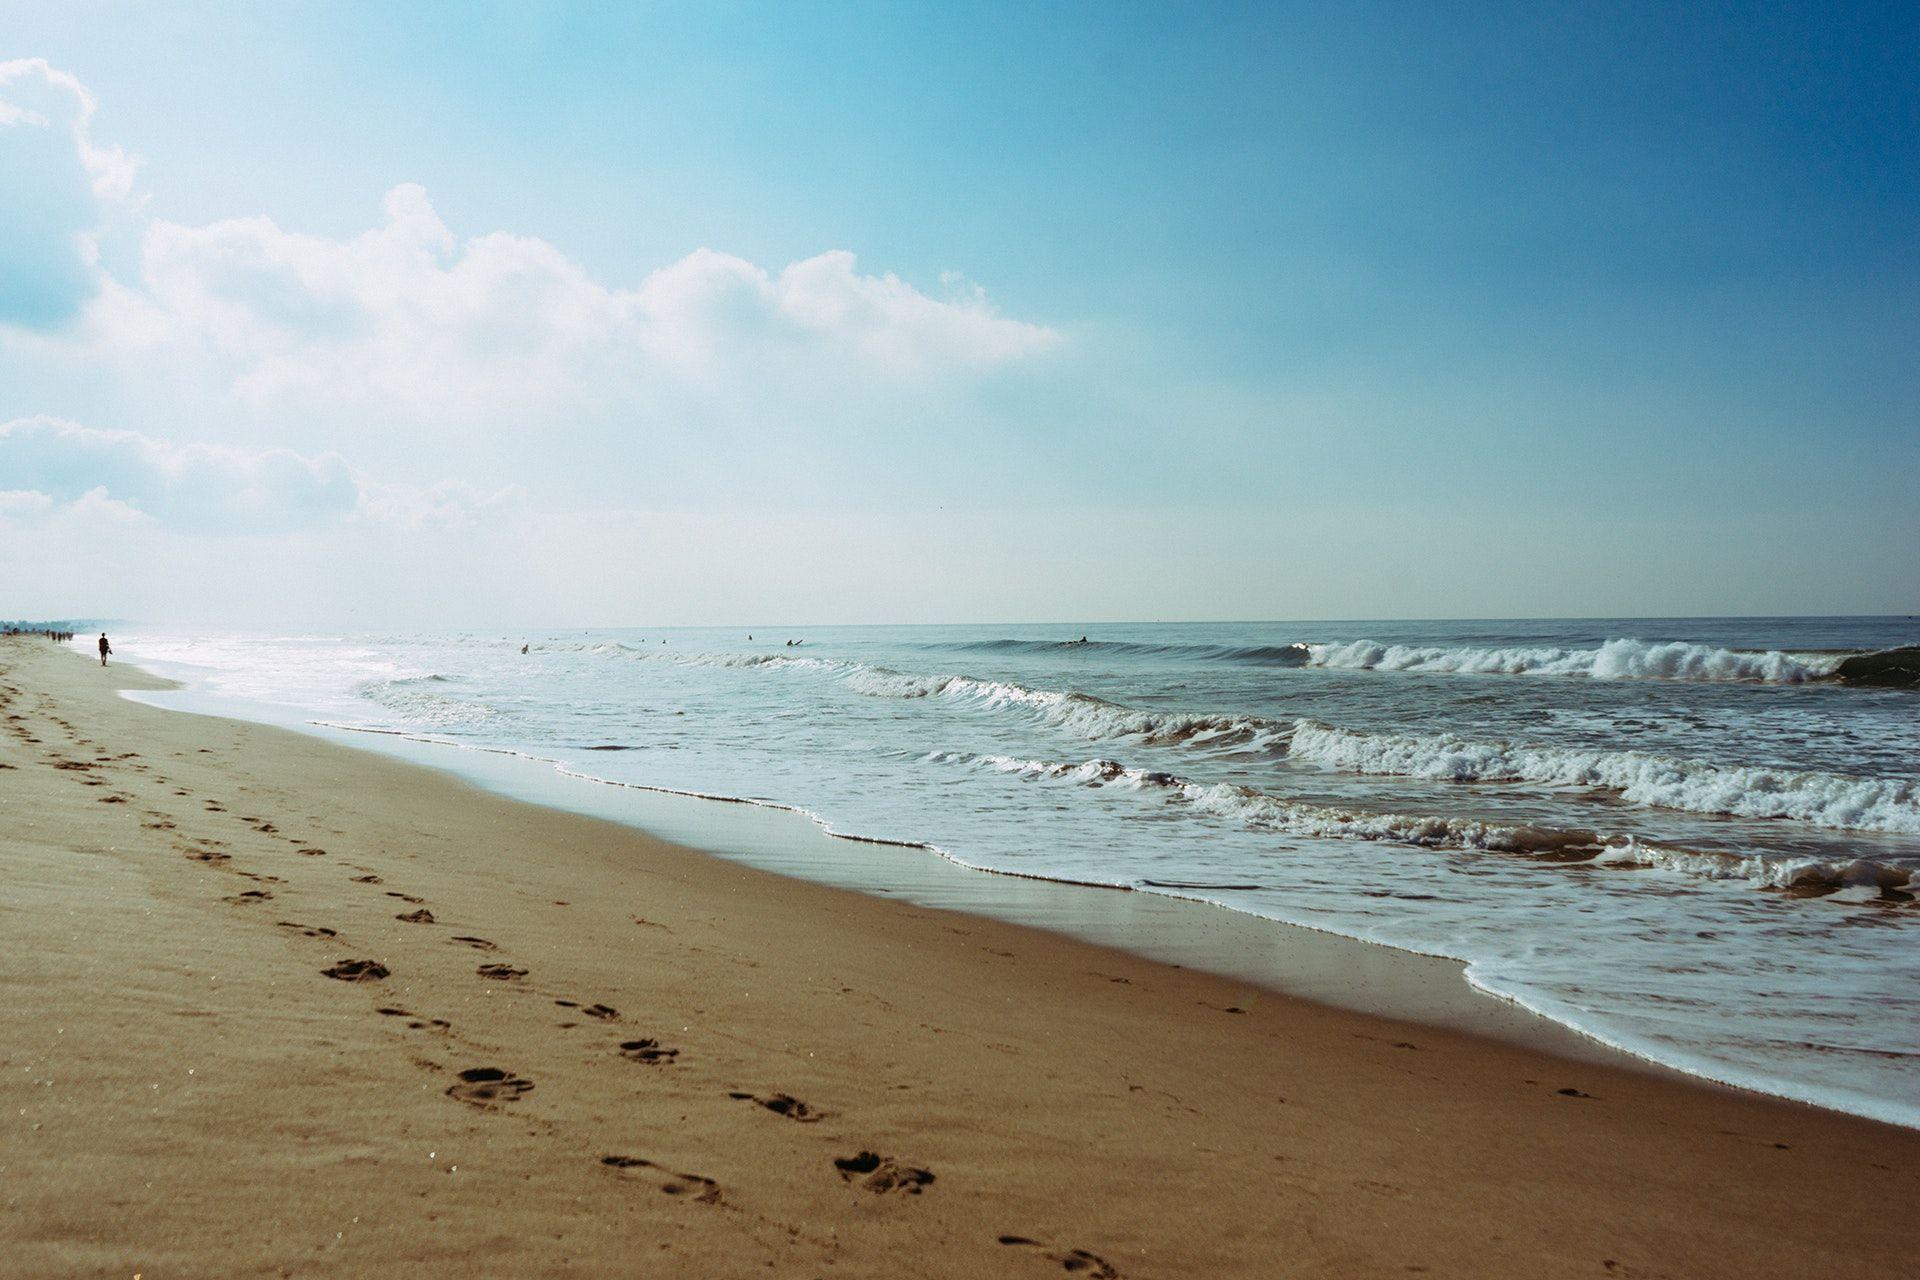 Free of beach, footprint, salt water